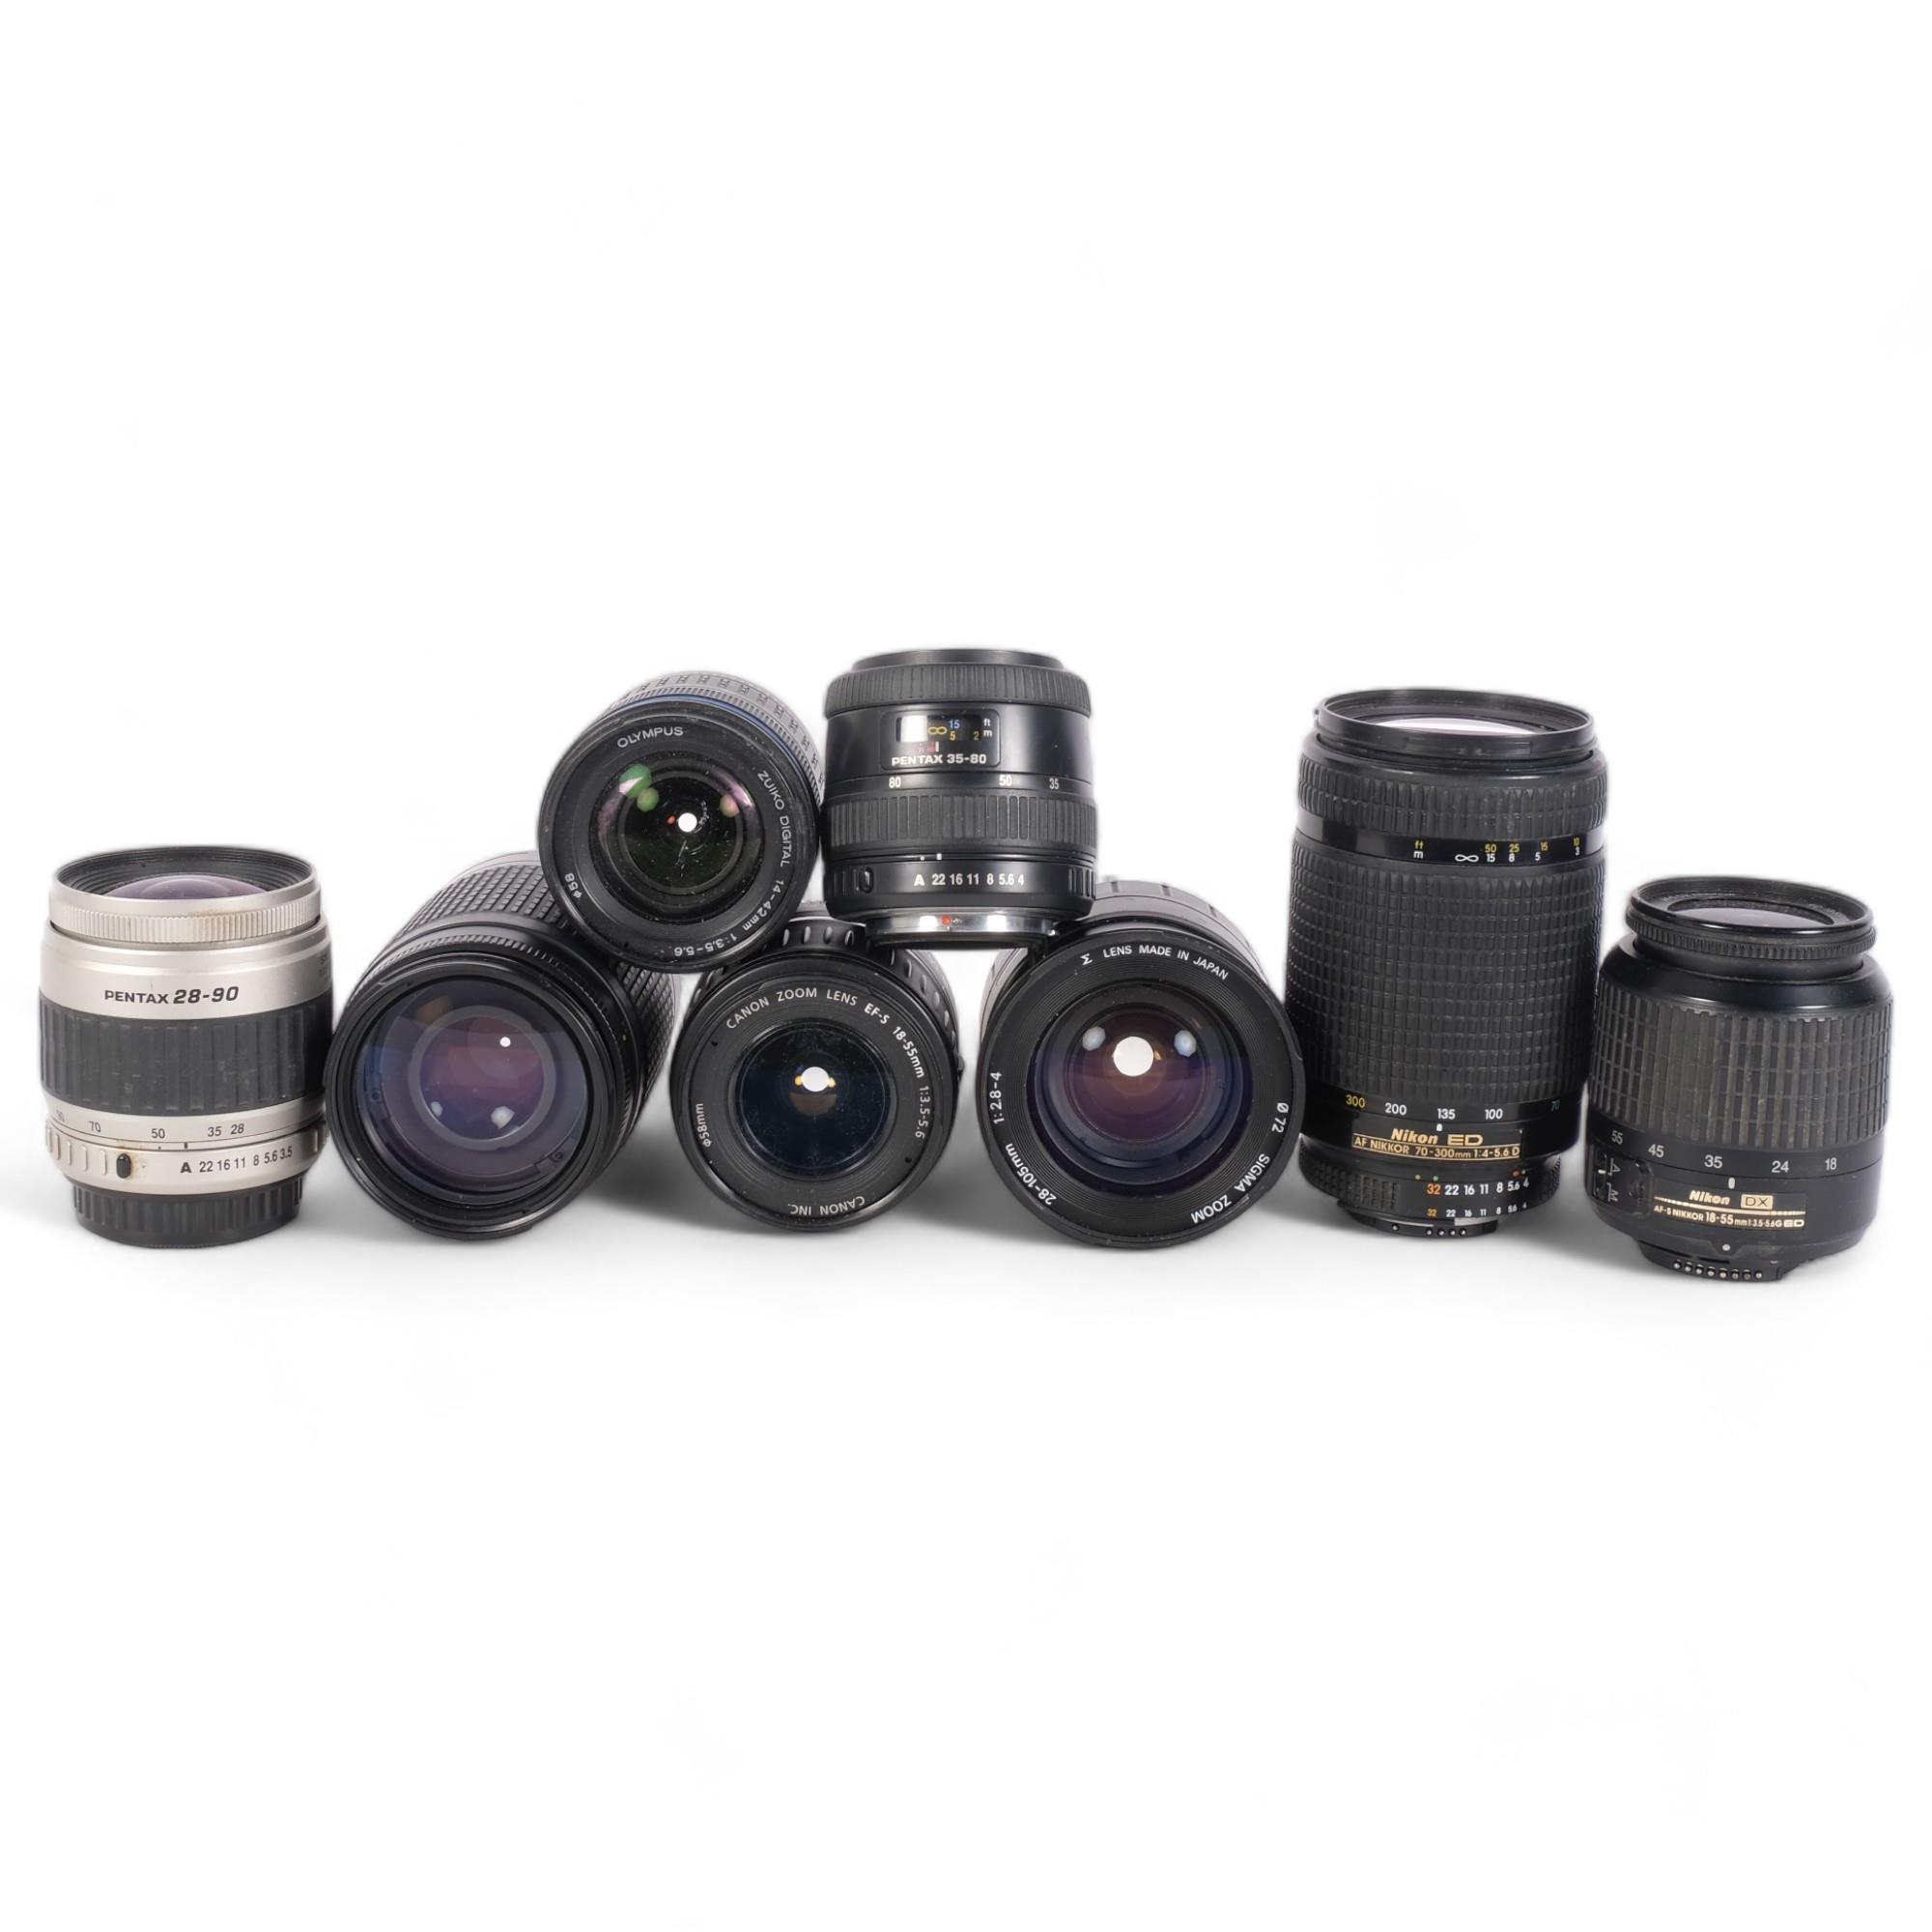 A quantity of Vintage camera lenses, various brands including Nikon, Nikkor, Sigma, Pentax, Olympus,